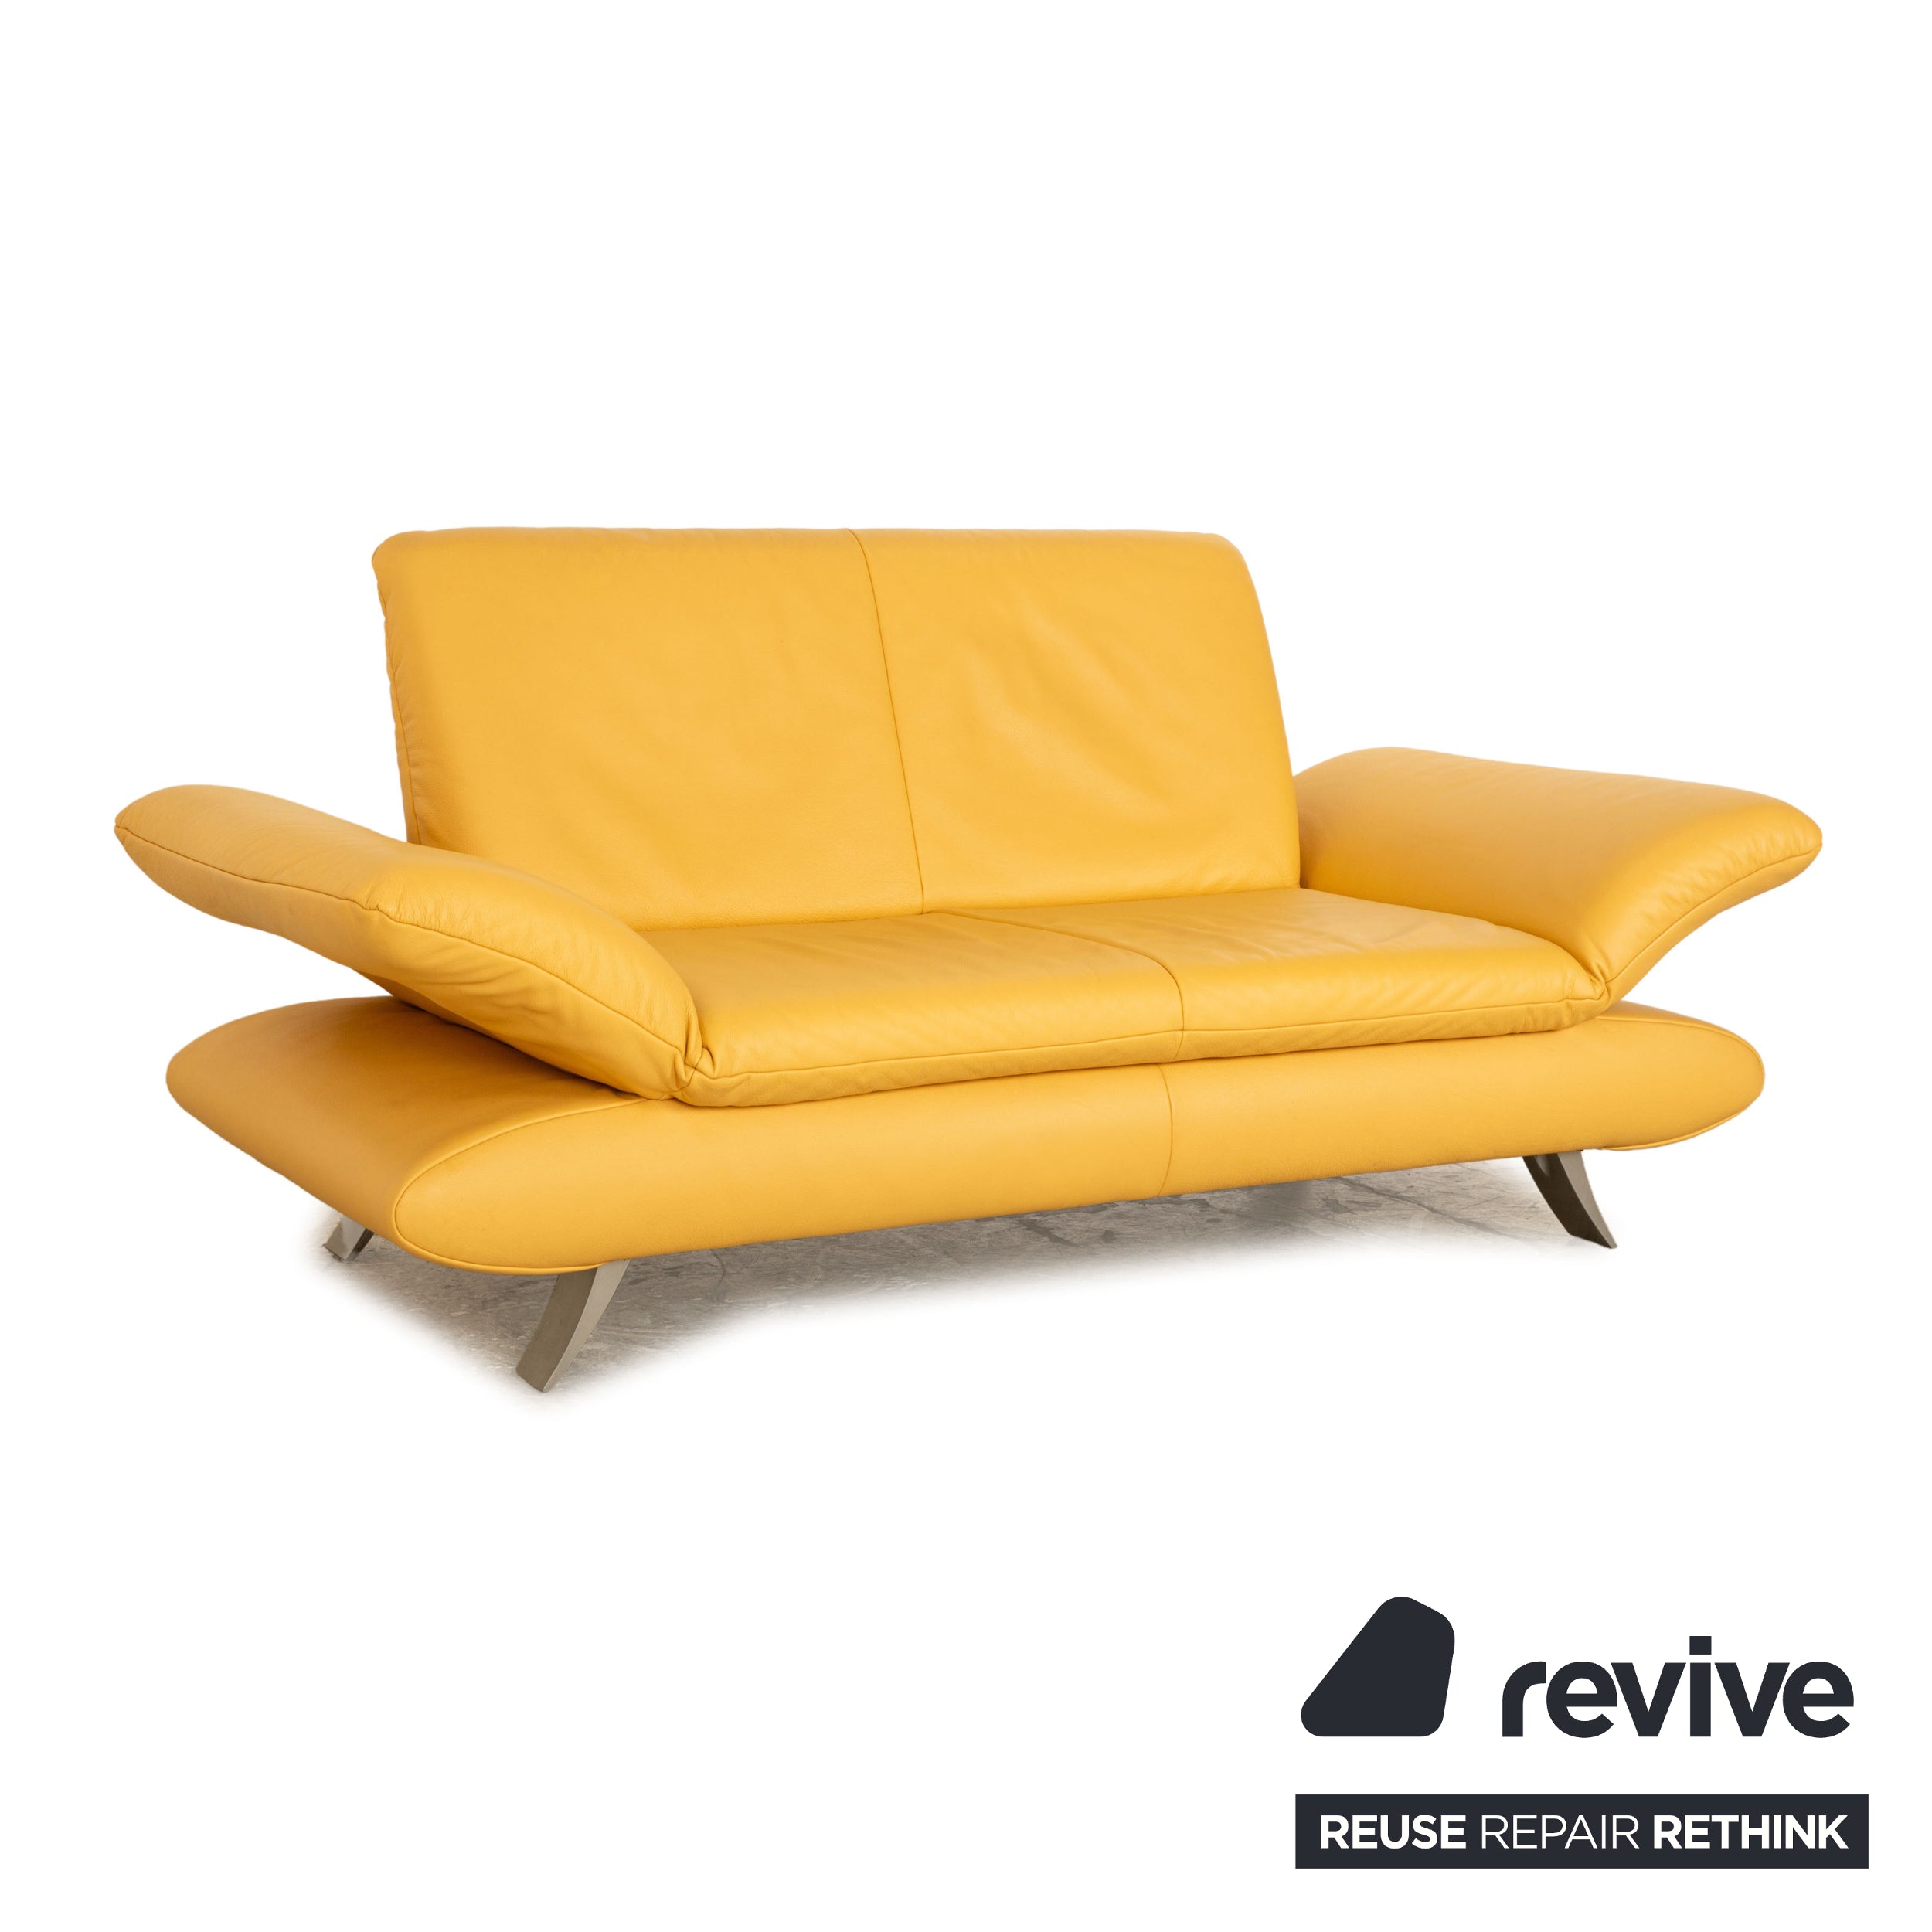 Koinor Rossini Leder Zweisitzer Gelb manuelle Funktion Sofa Couch